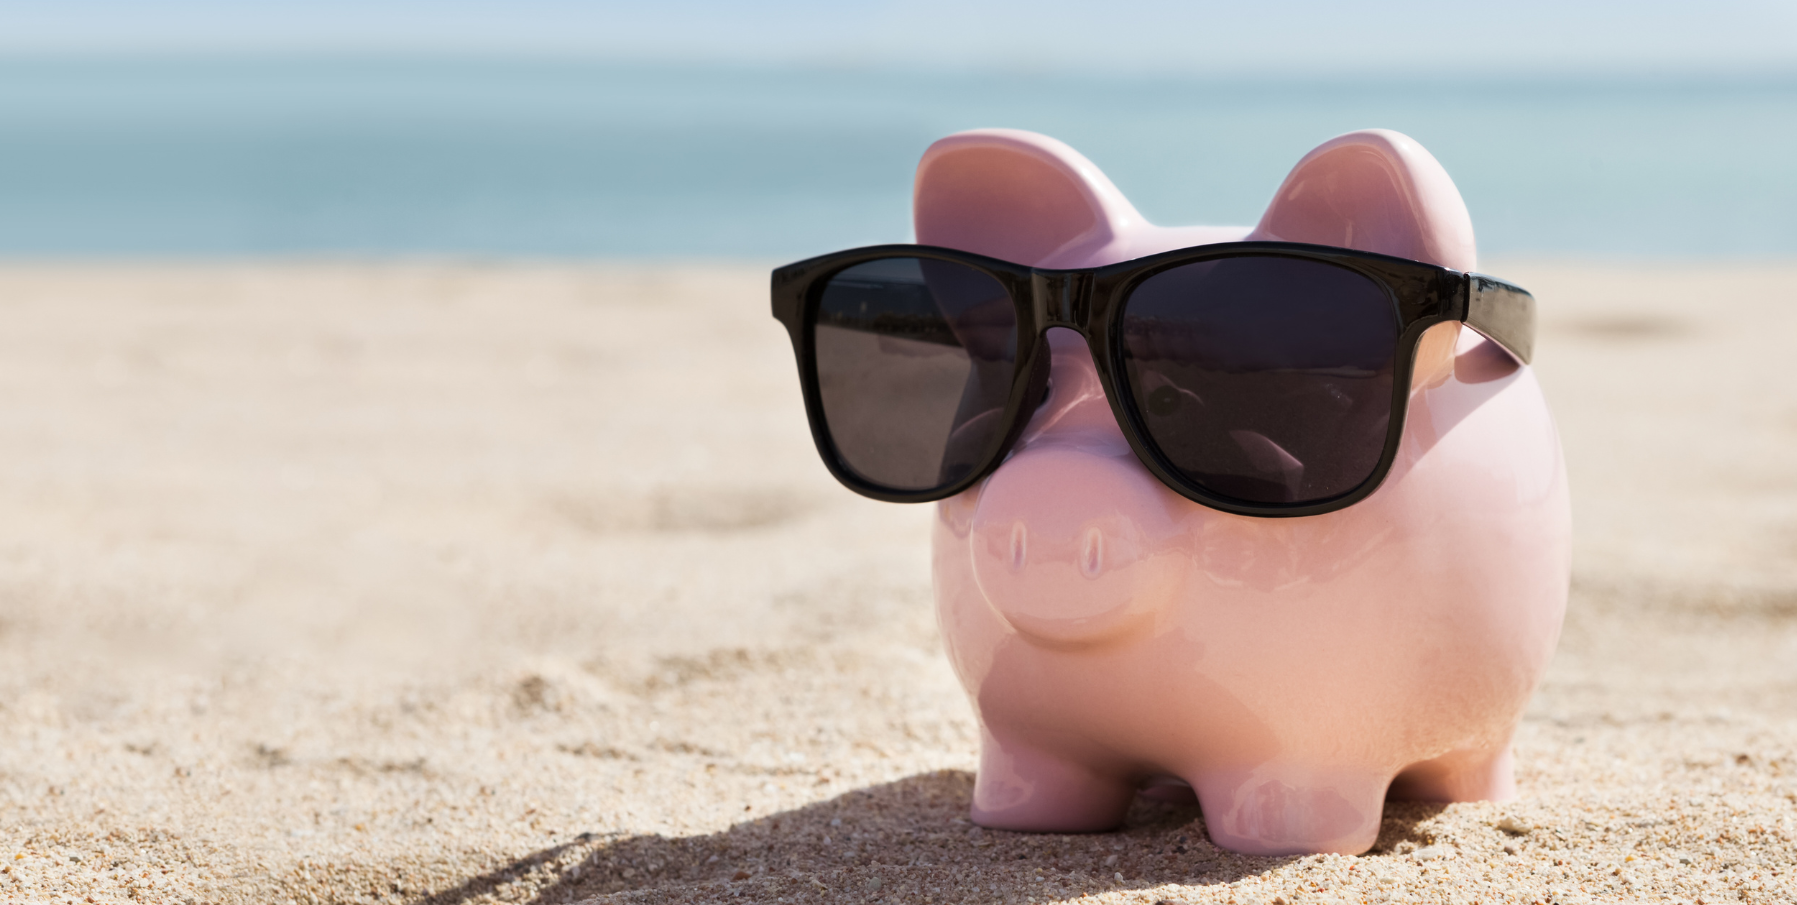 Enjoy a Budget-Savvy Summer! 